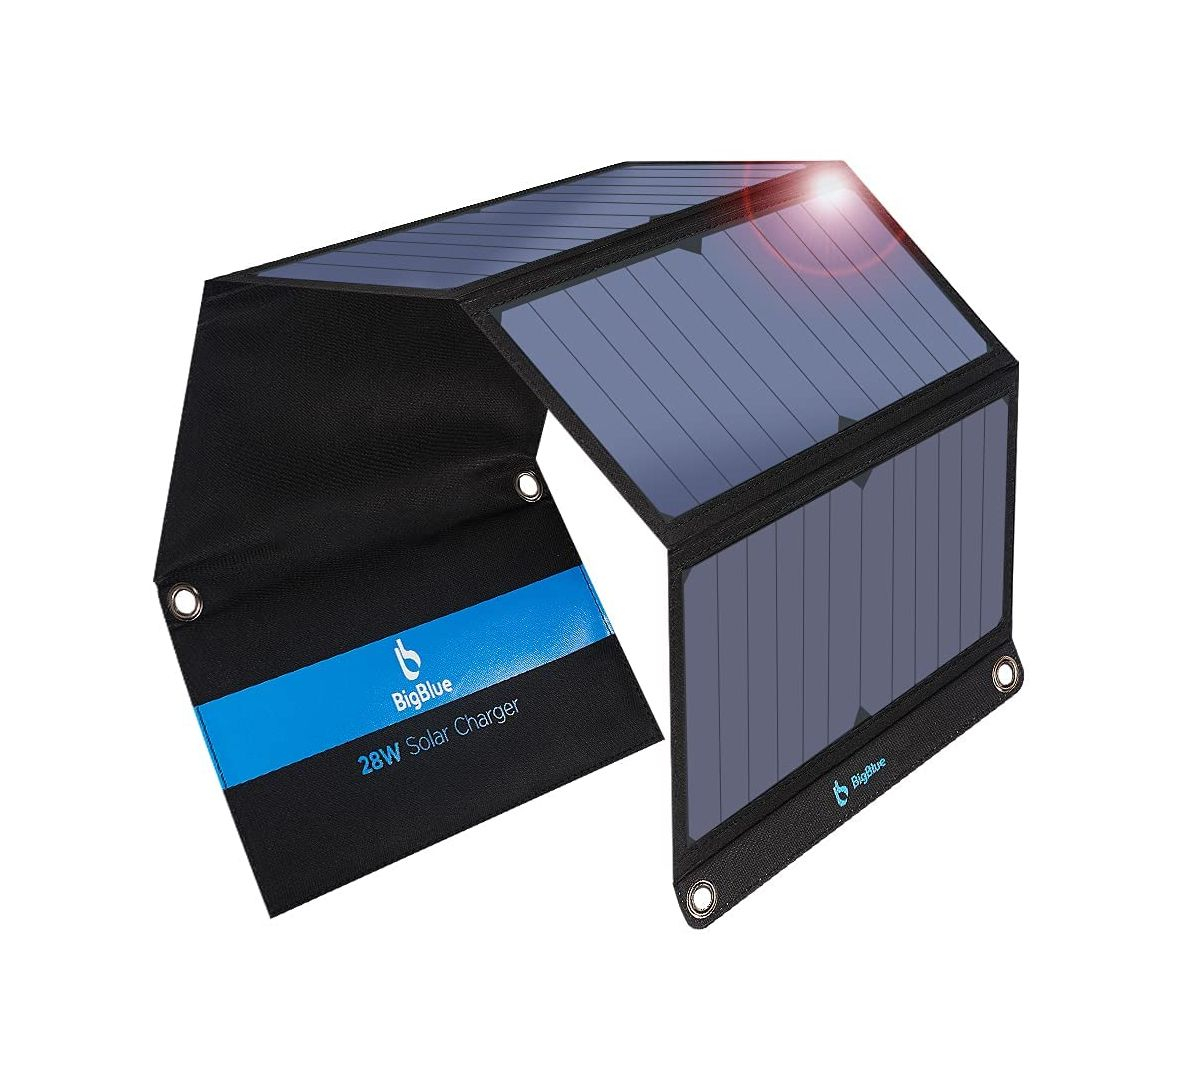 BigBlue Solar 28W Solarladegerät